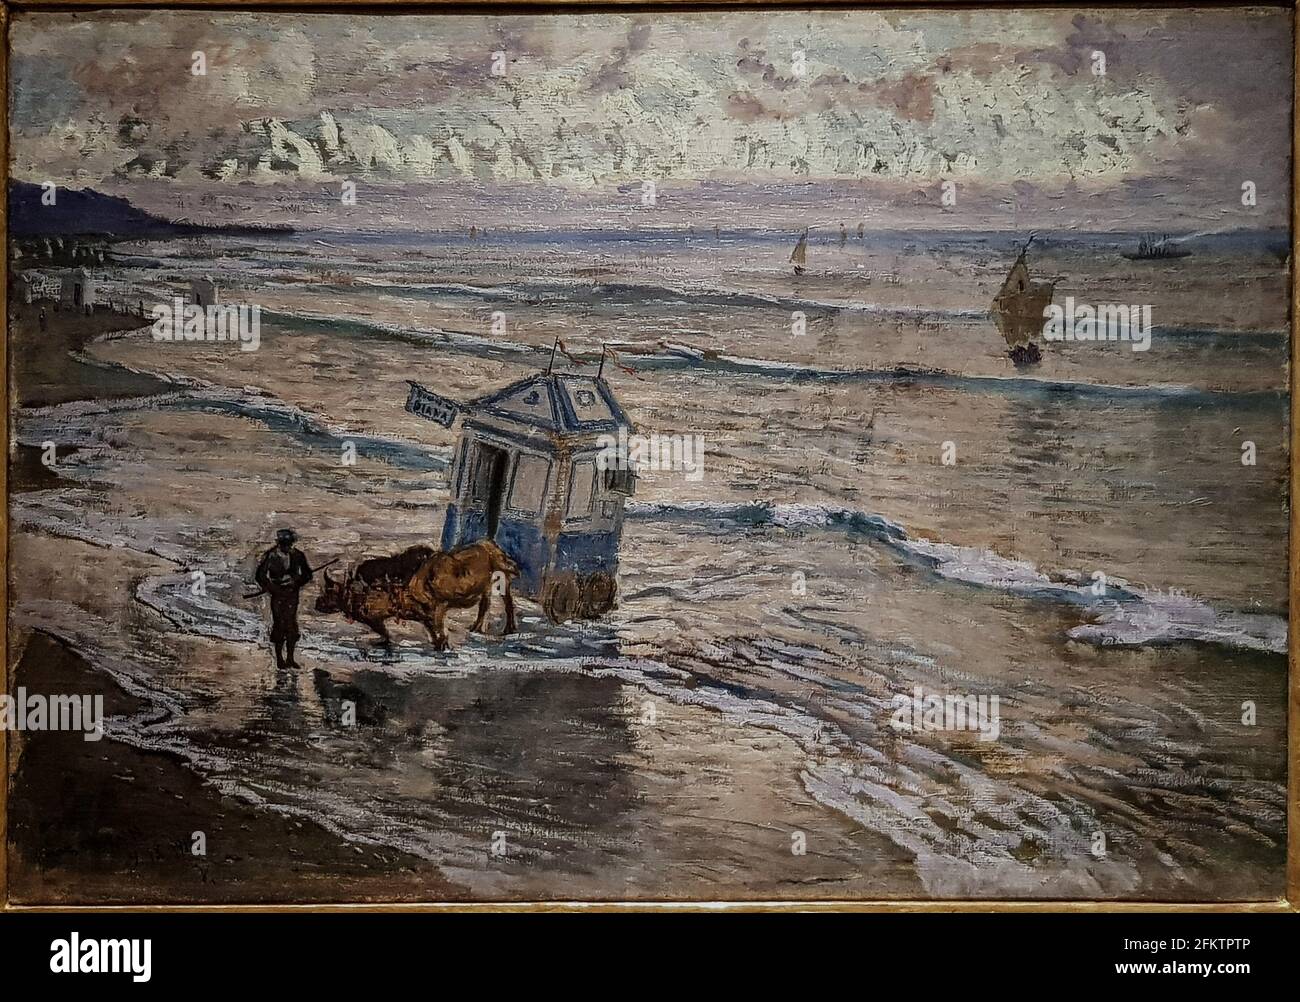 Antonio Muñoz Degrain (1840 - 1924). Cantabrian beach. 1912. Oil on canvas. Stock Photo